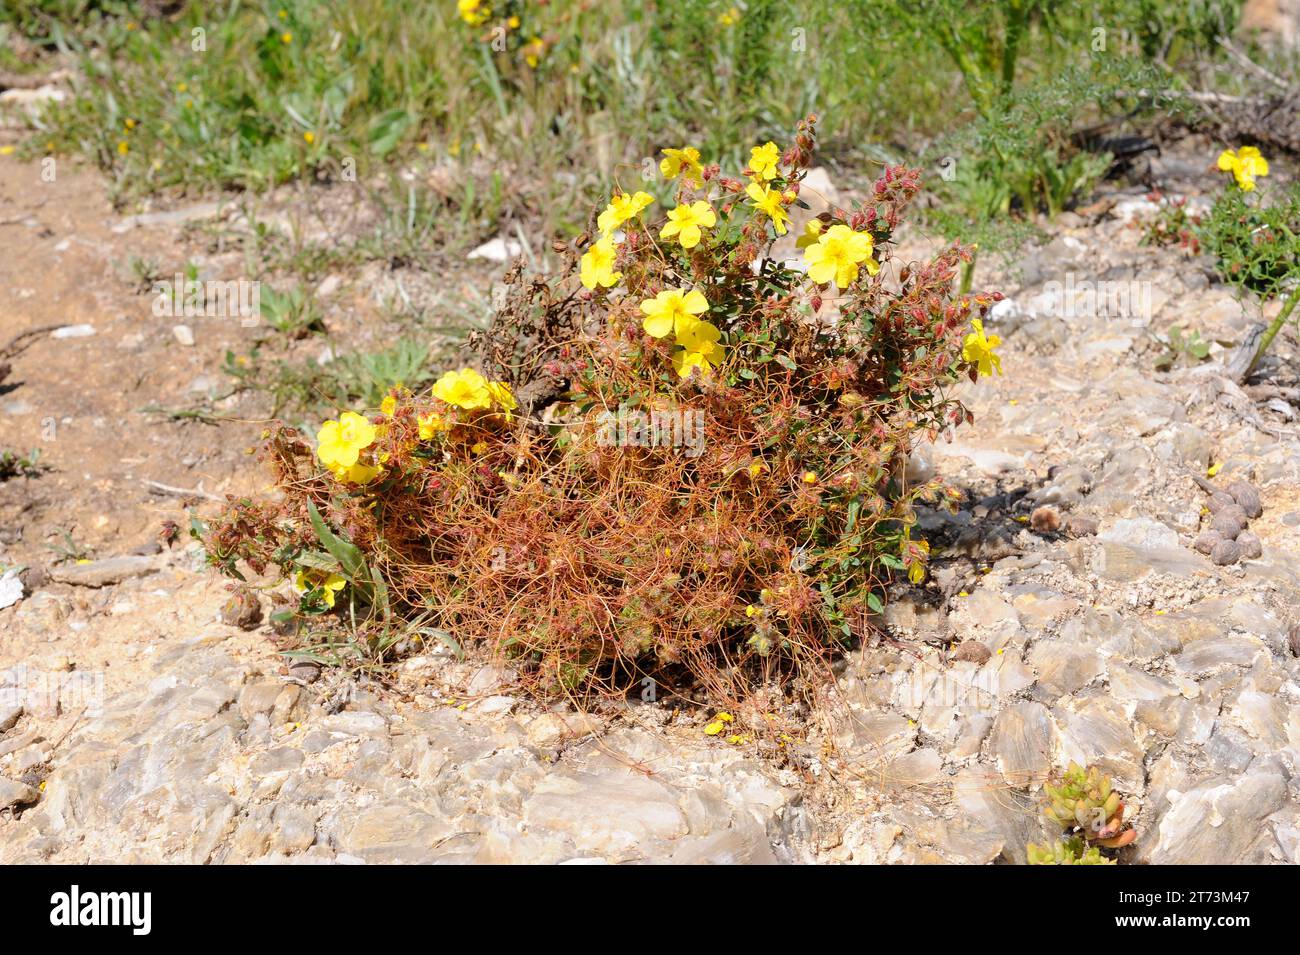 Jarilla de Sorbas (Helianthemum alypoides)  parasitized by dodder (Cuscuta epithymum). Helianthemum alypoides is a shrub endemic to gypsum soils of  A Stock Photo